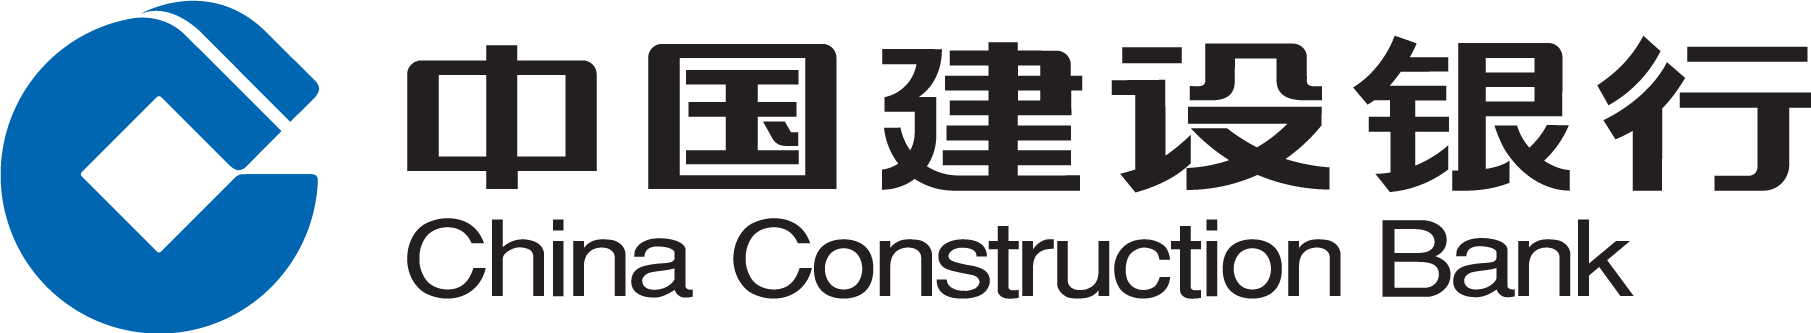 Construction bank of china. China Construction Bank лого. Китайский строительный банк. China Construction Bank Corp. Строительный банк Китая China Construction Bank CCB.